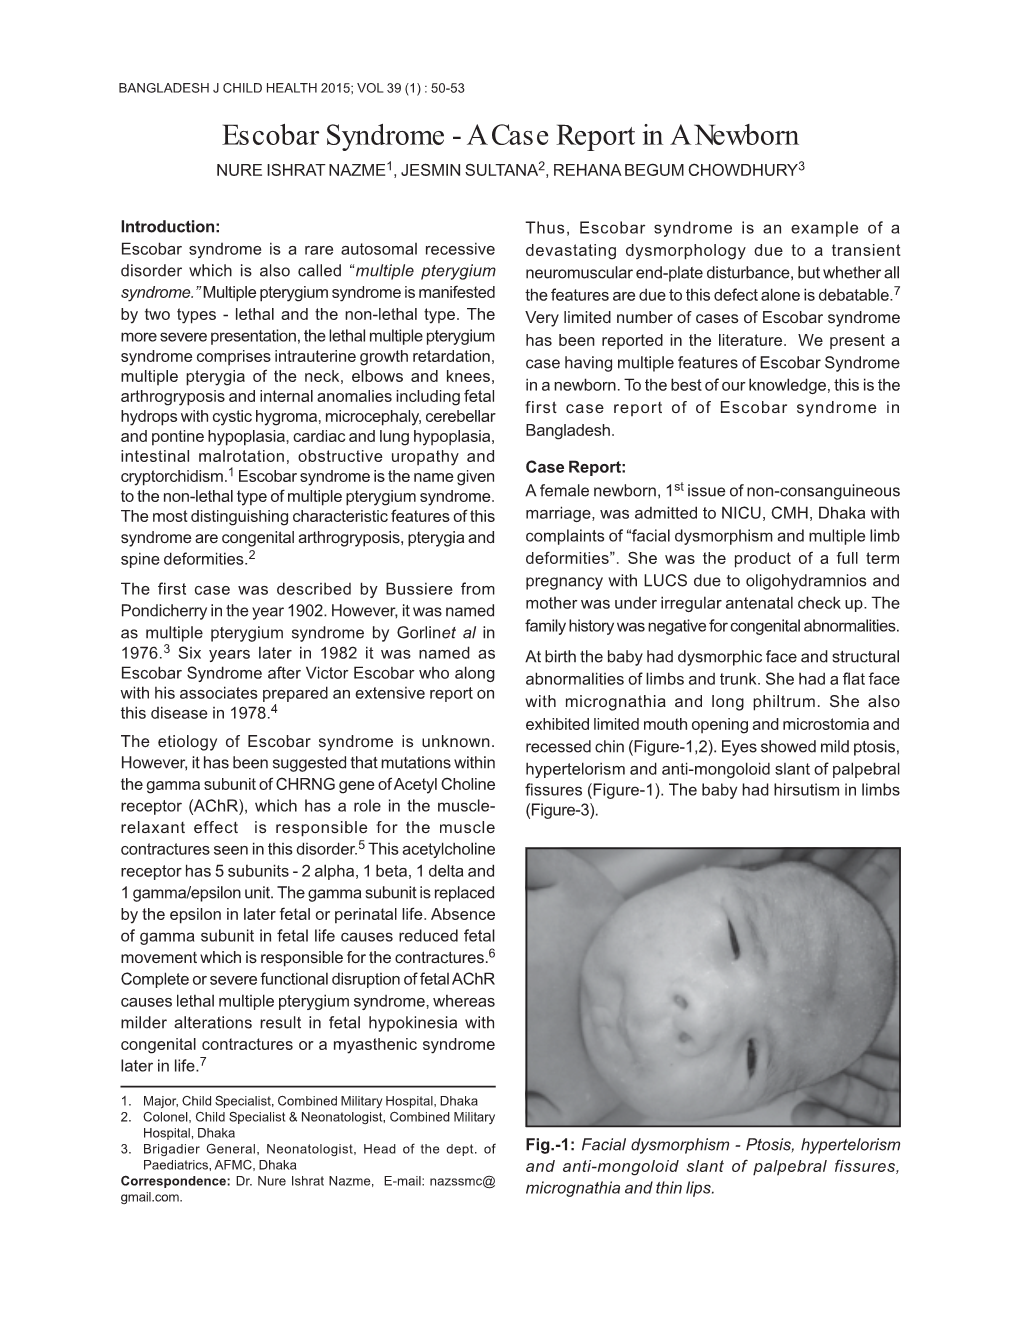 Escobar Syndrome - a Case Report in a Newborn NURE ISHRAT NAZME1, JESMIN SULTANA2, REHANA BEGUM CHOWDHURY3